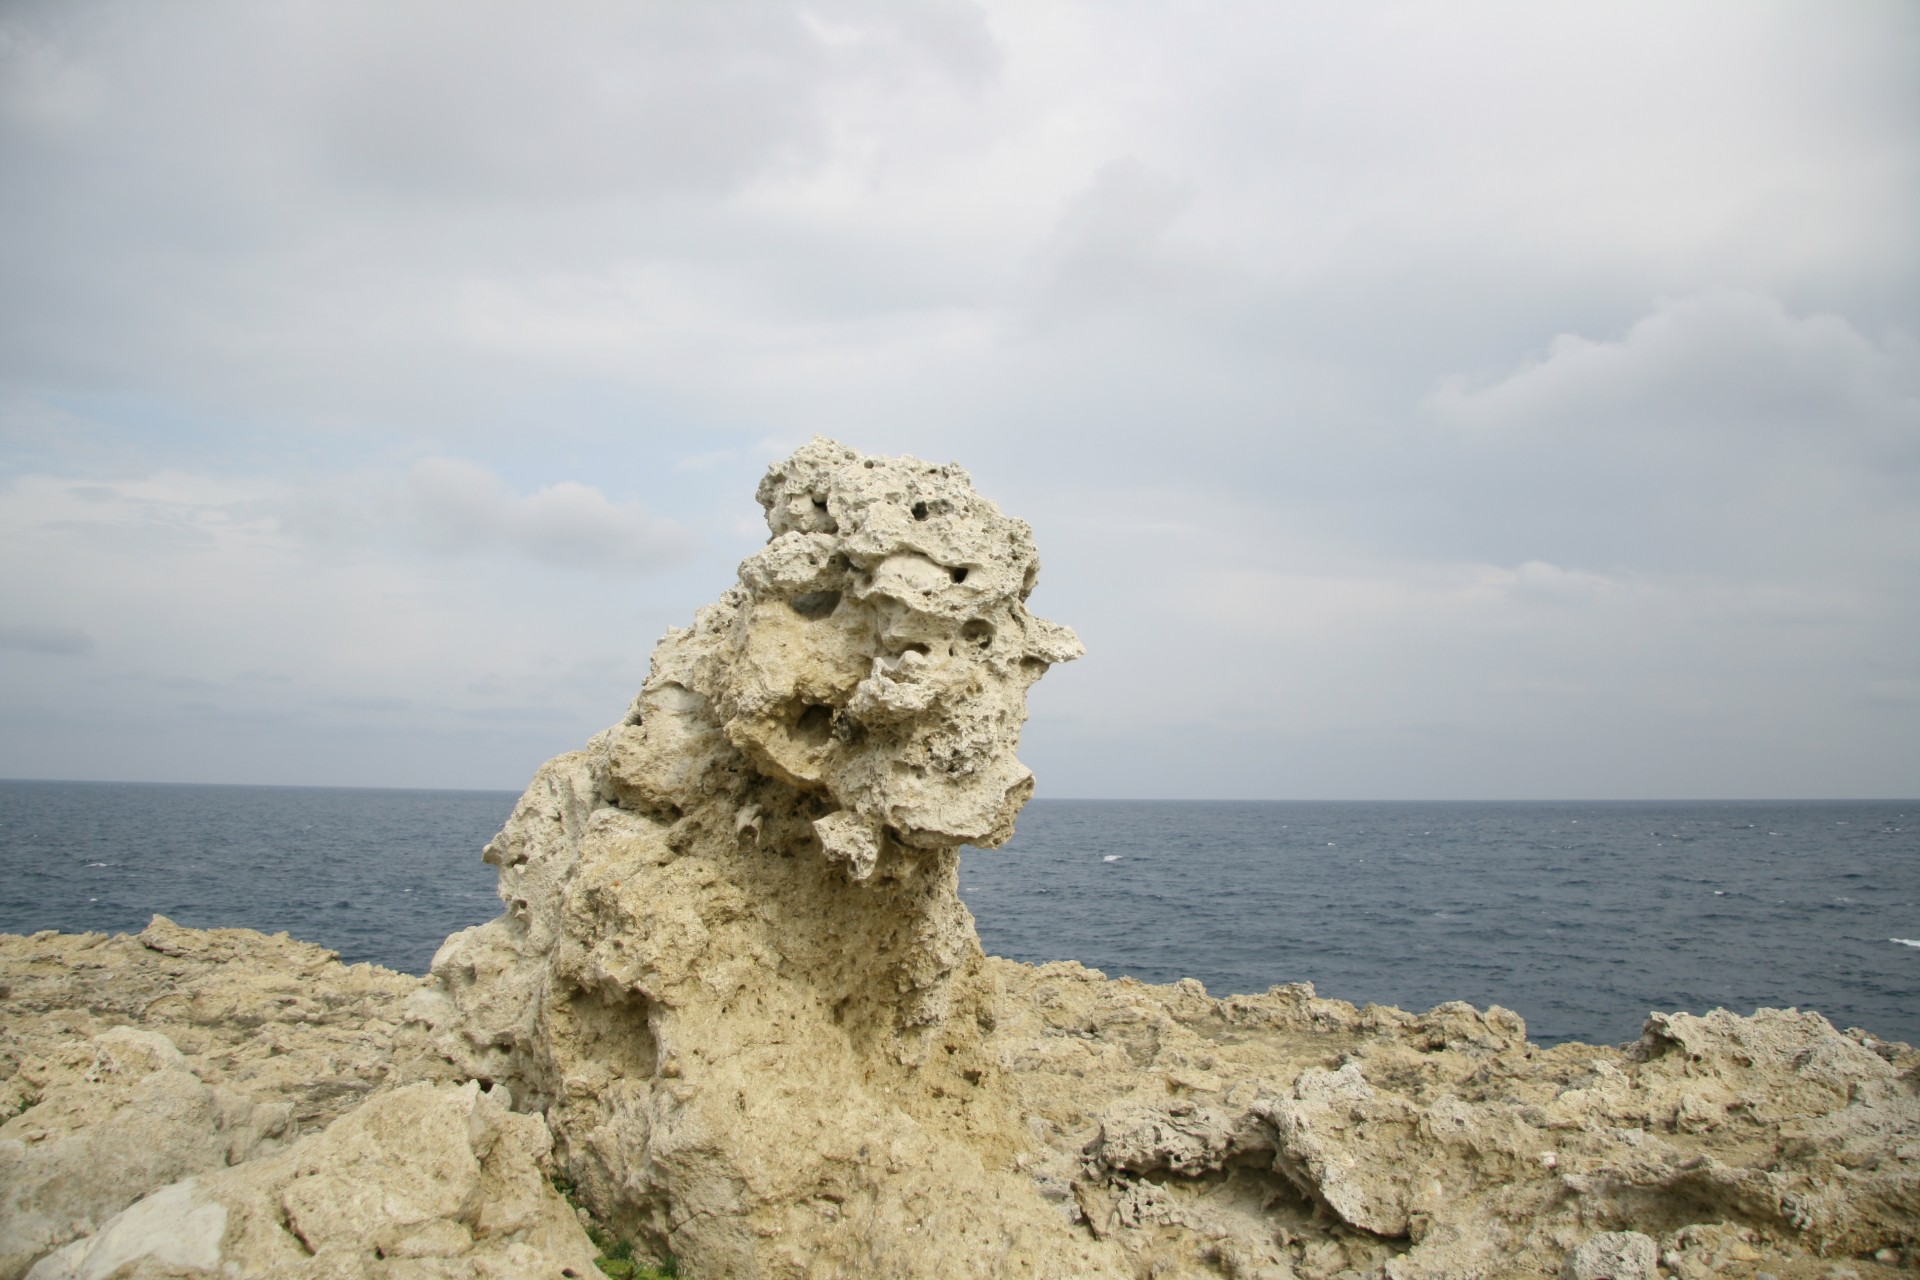 Crete Greece Rock Formations